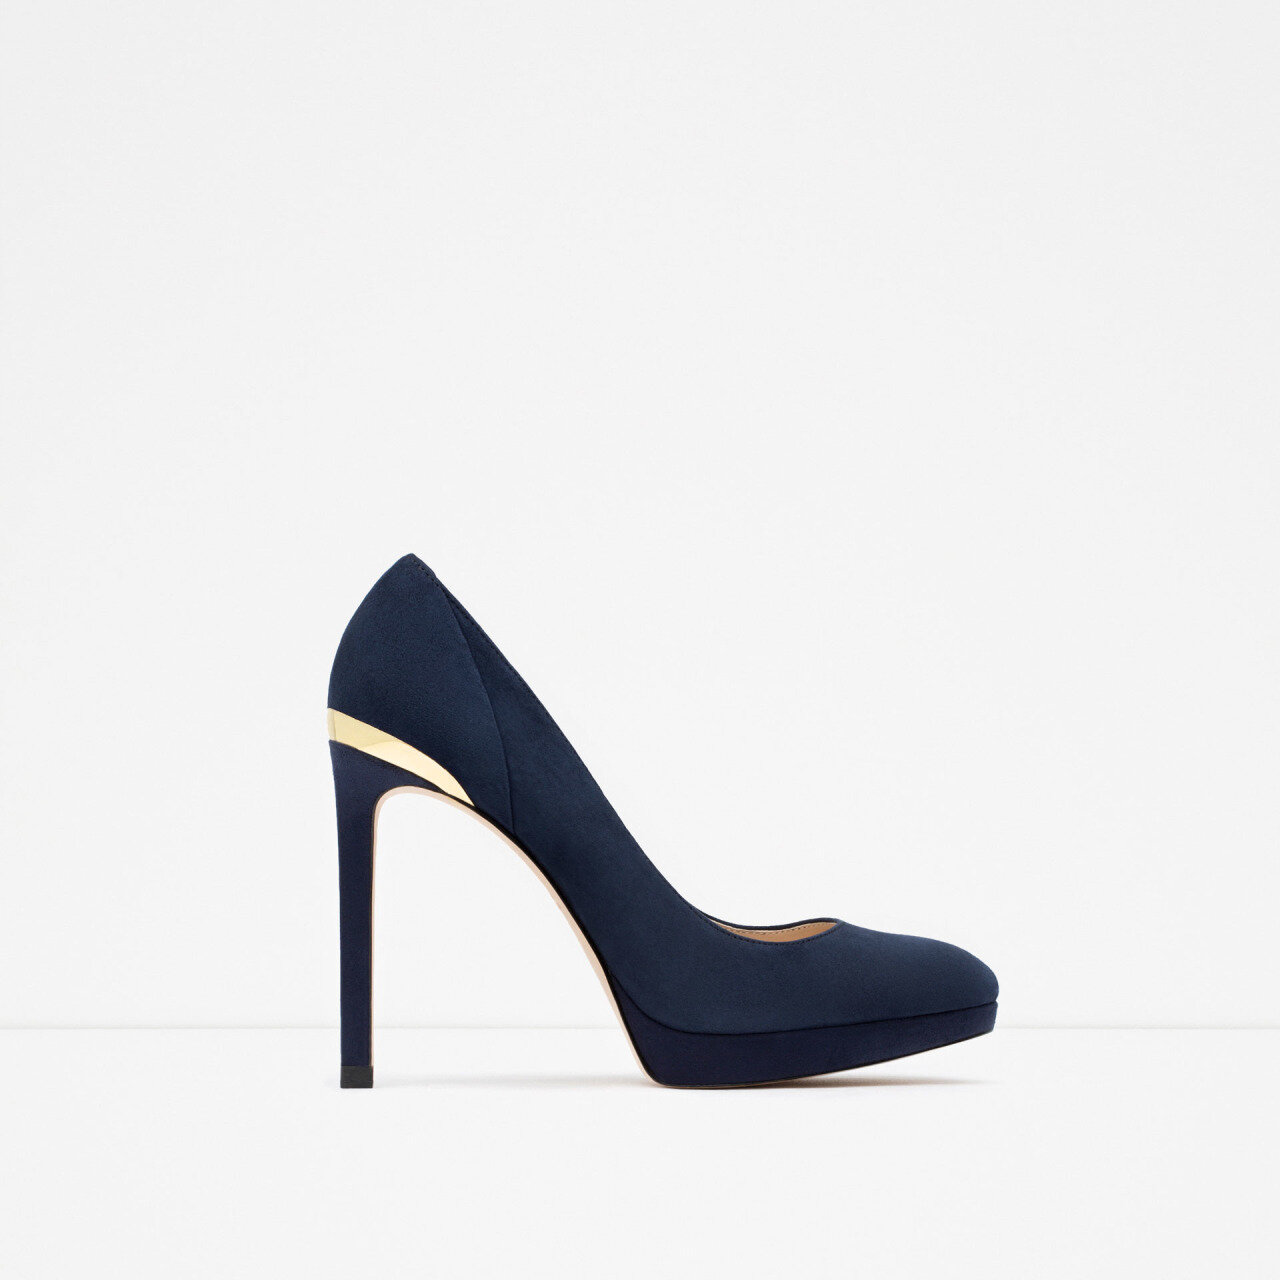 Zara High Heel and Platform Leather Shoes in Blue.jpg